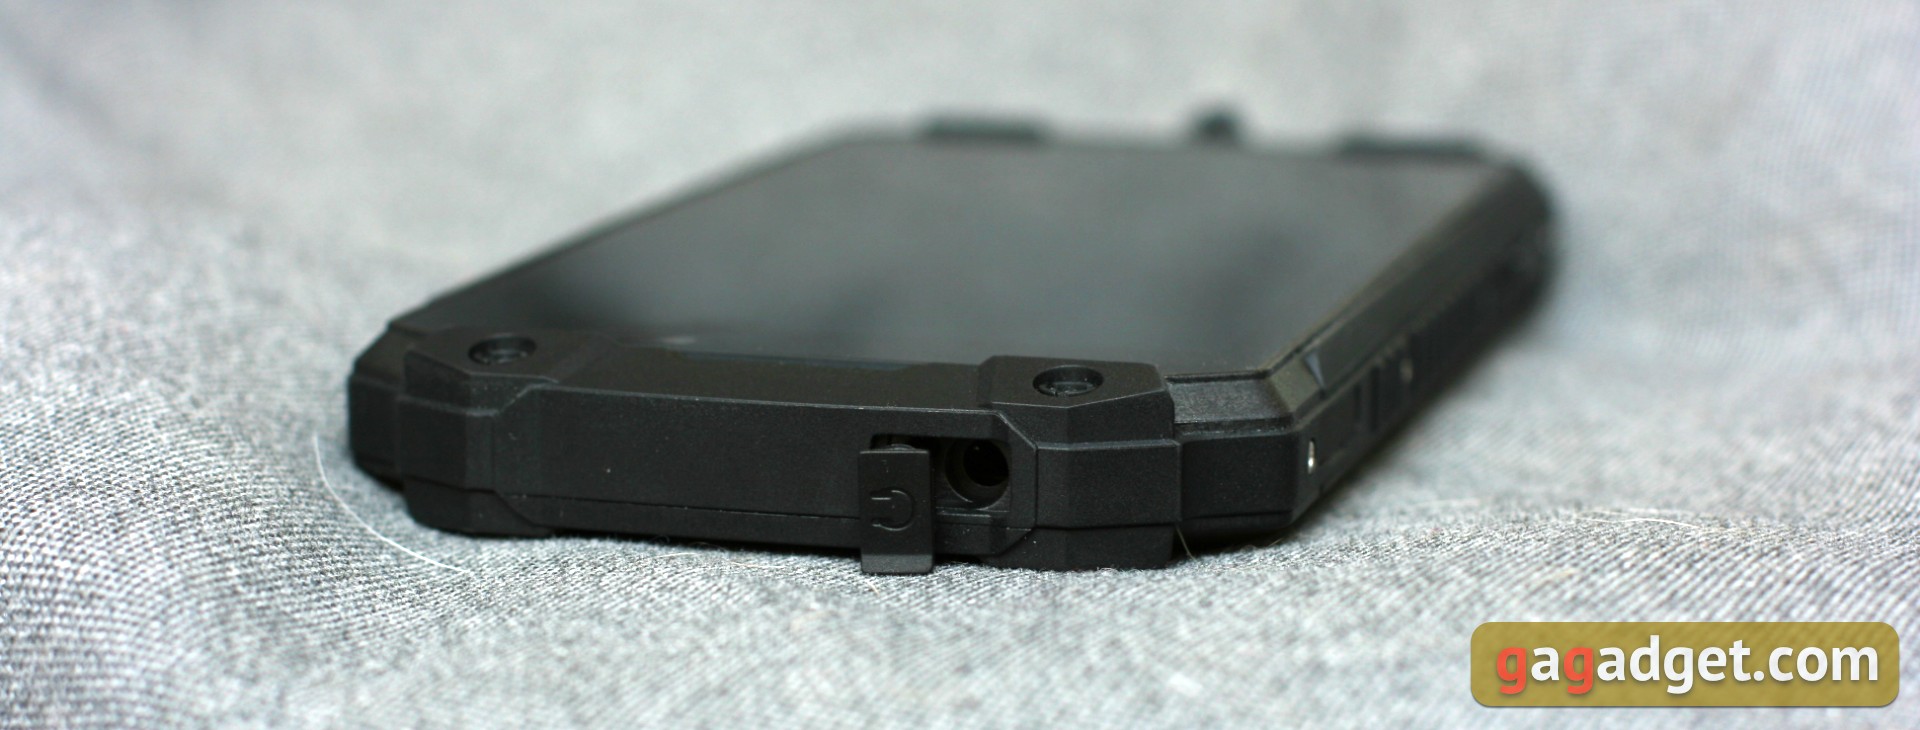 Обзор Sigma Mobile X-treme PQ39 MAX: современный защищённый батарейкофон-9